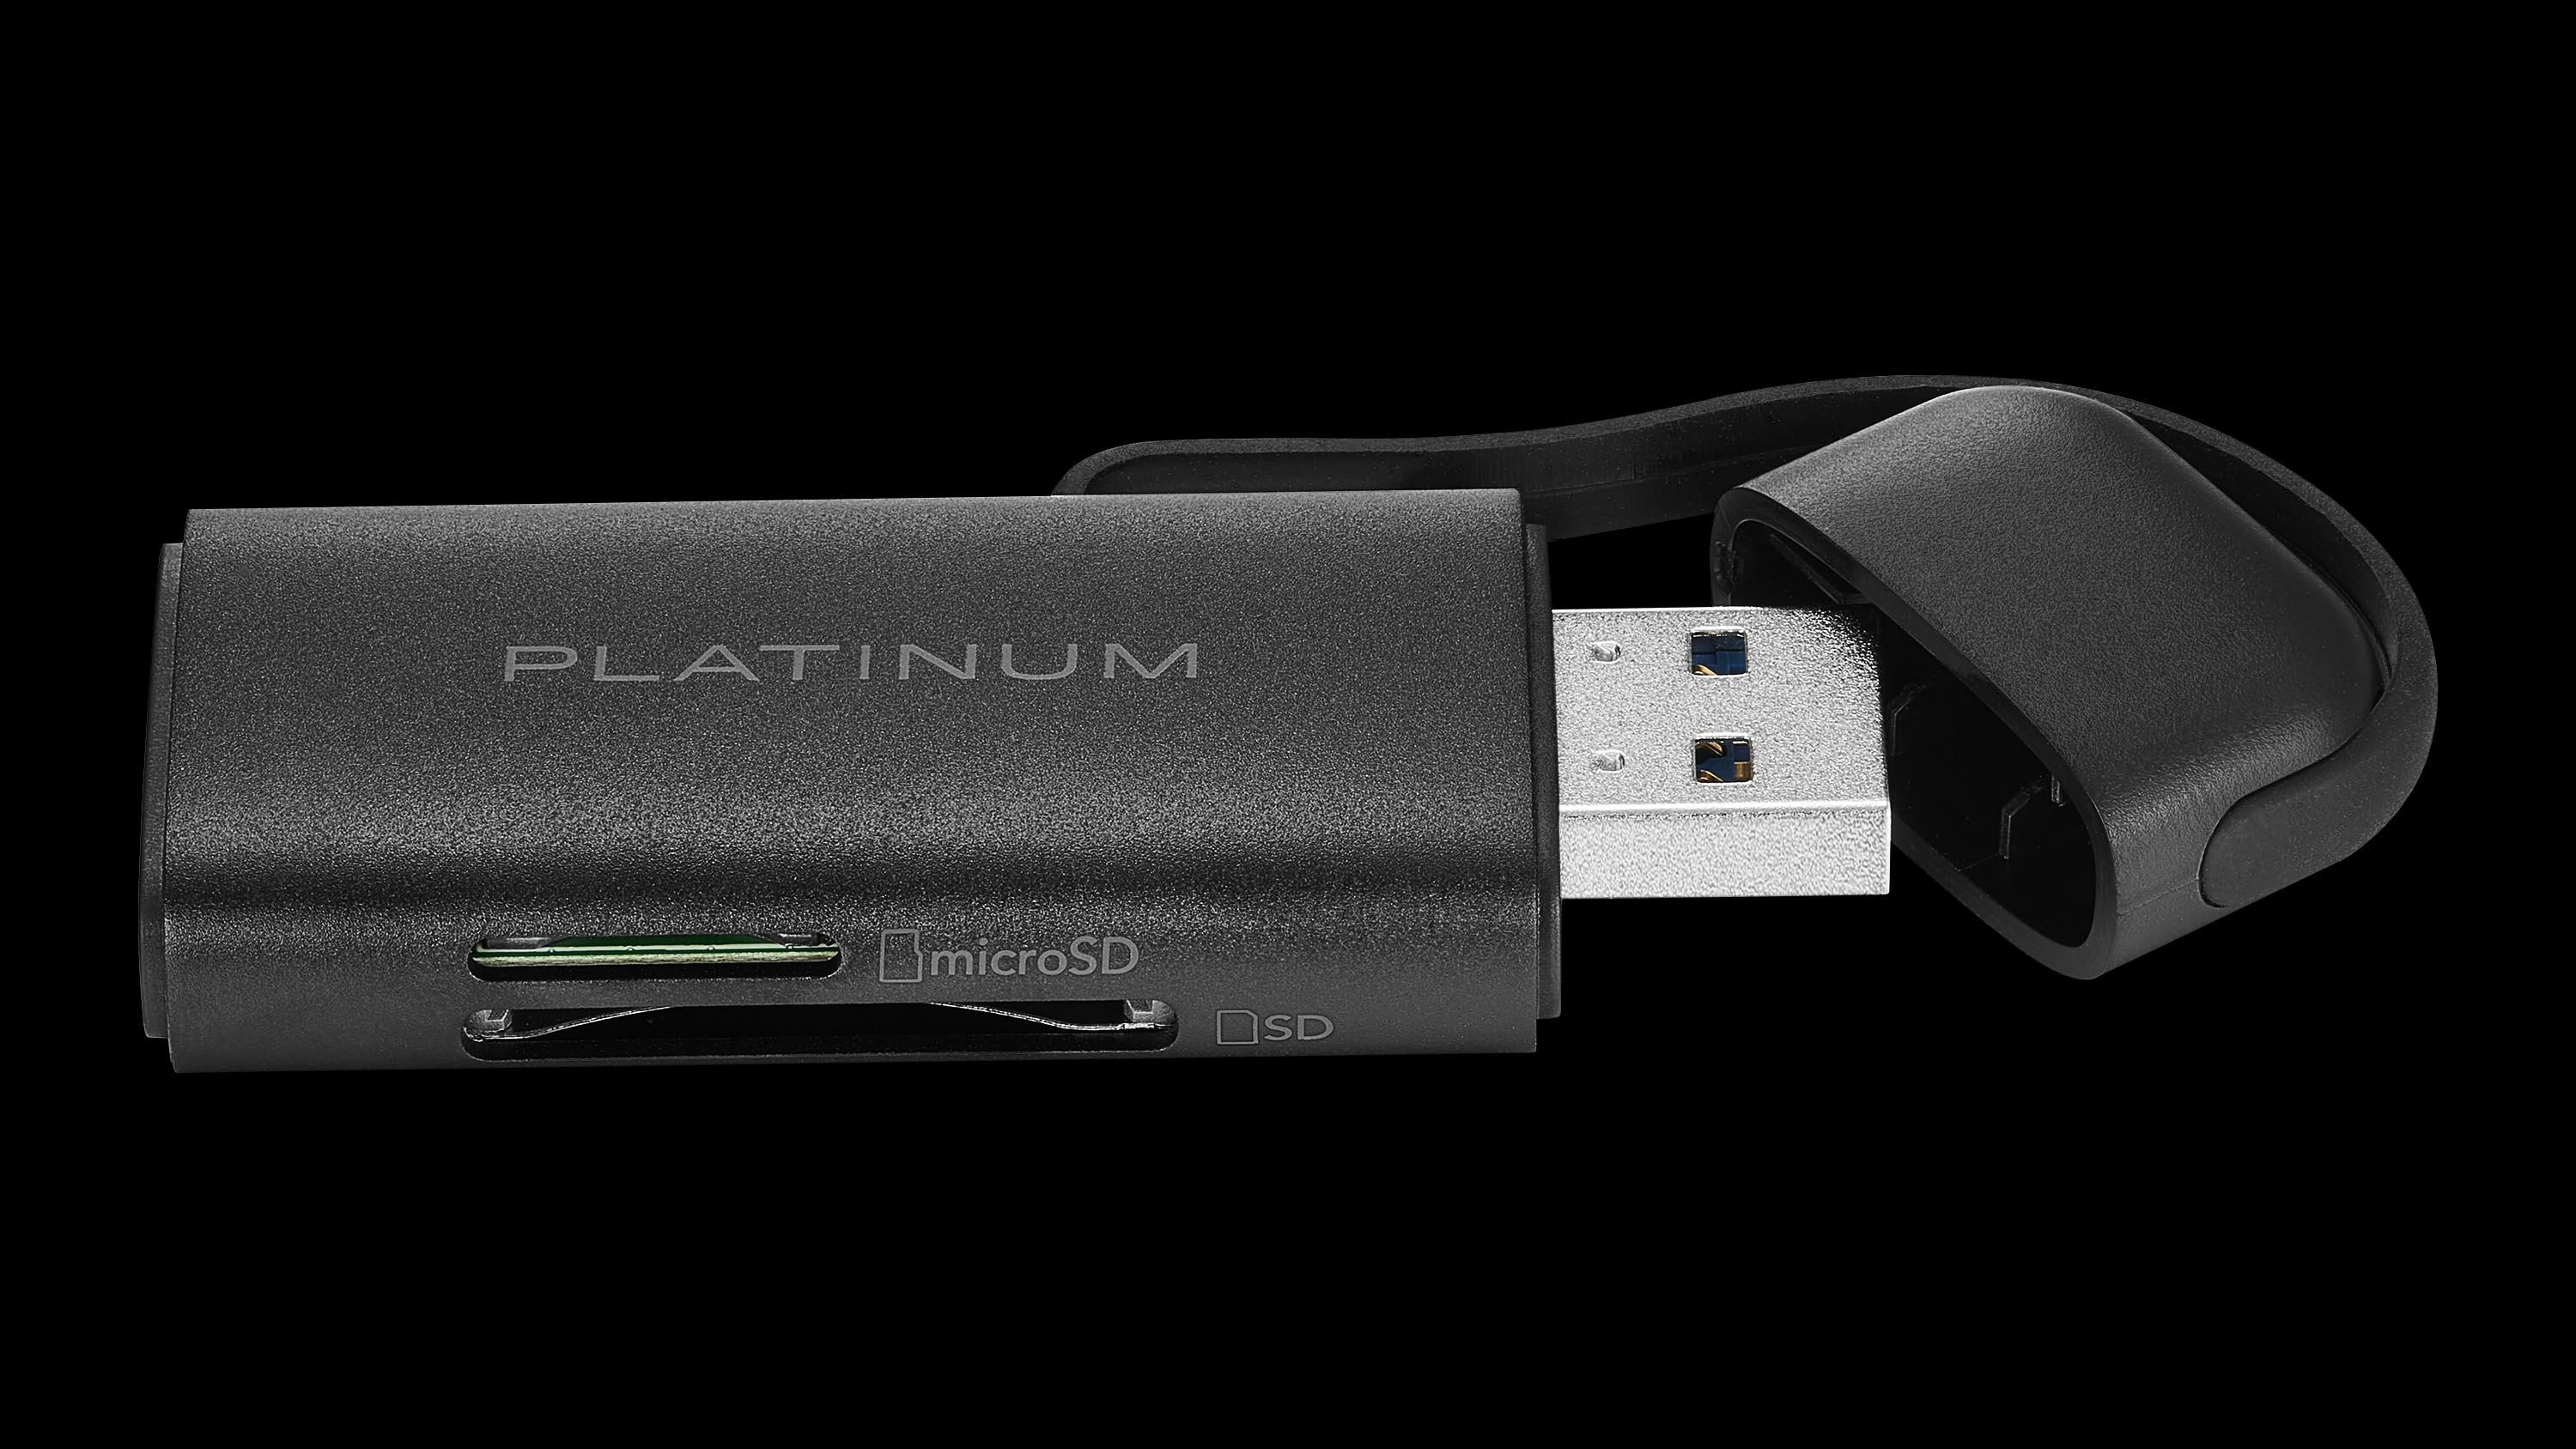 Platinum UHS-I USB 3.2 Gen 1 Memory Card Reader